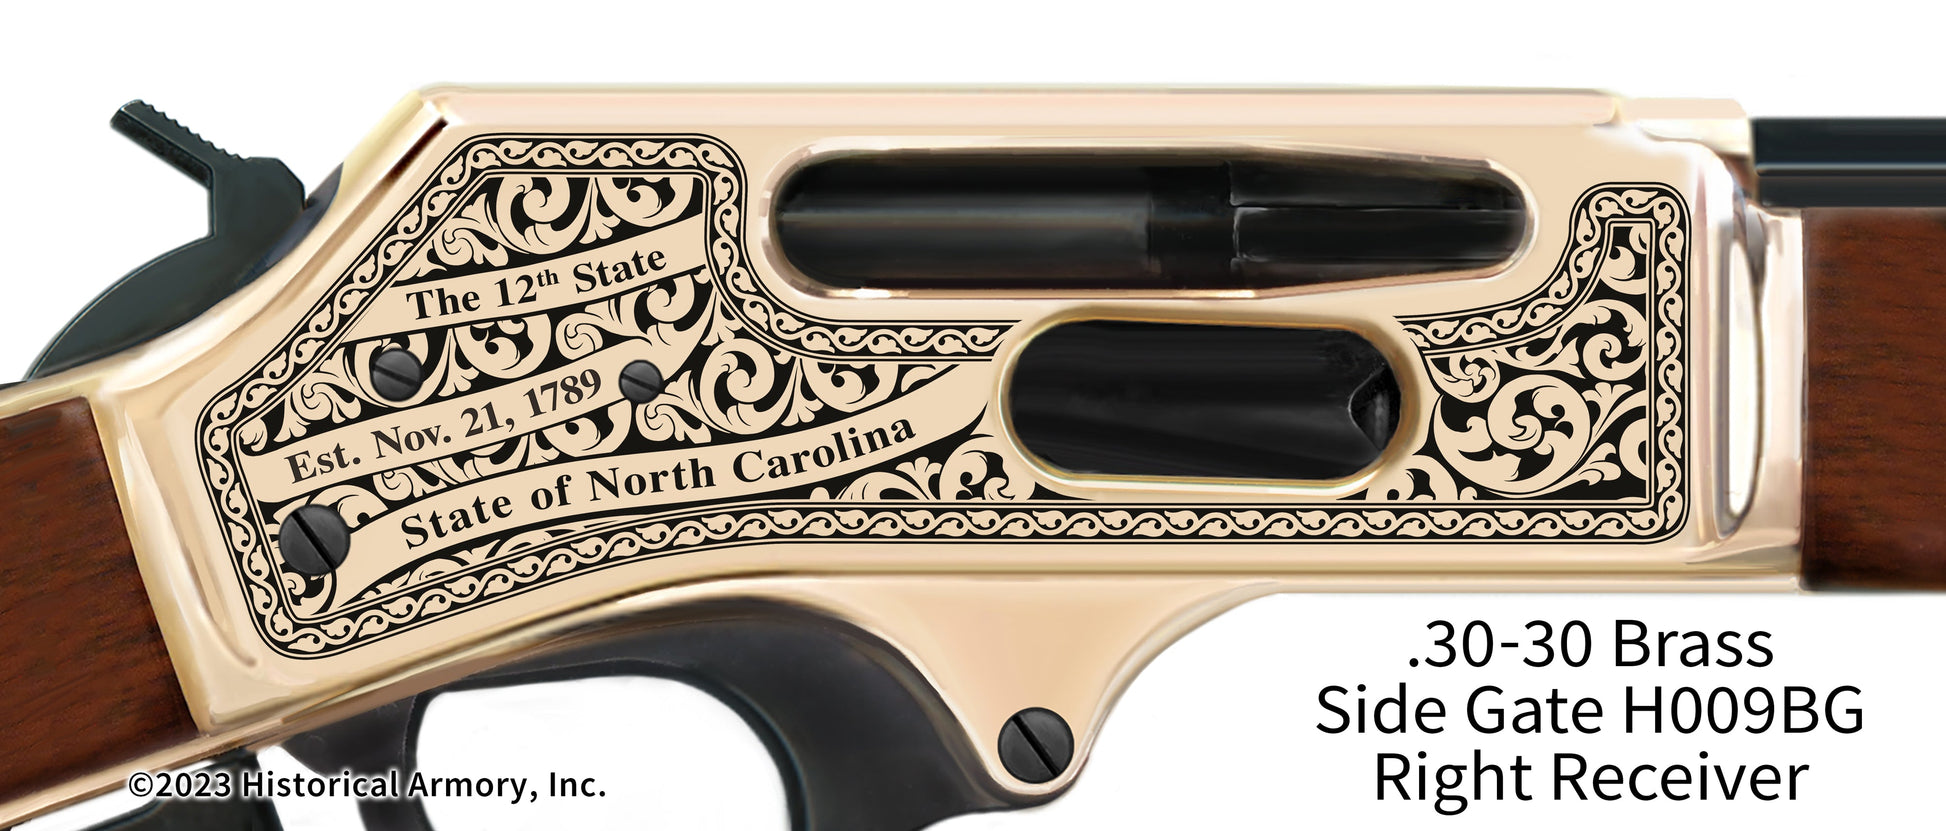 Stokes County North Carolina Engraved Henry .30-30 Brass Side Gate Rifle